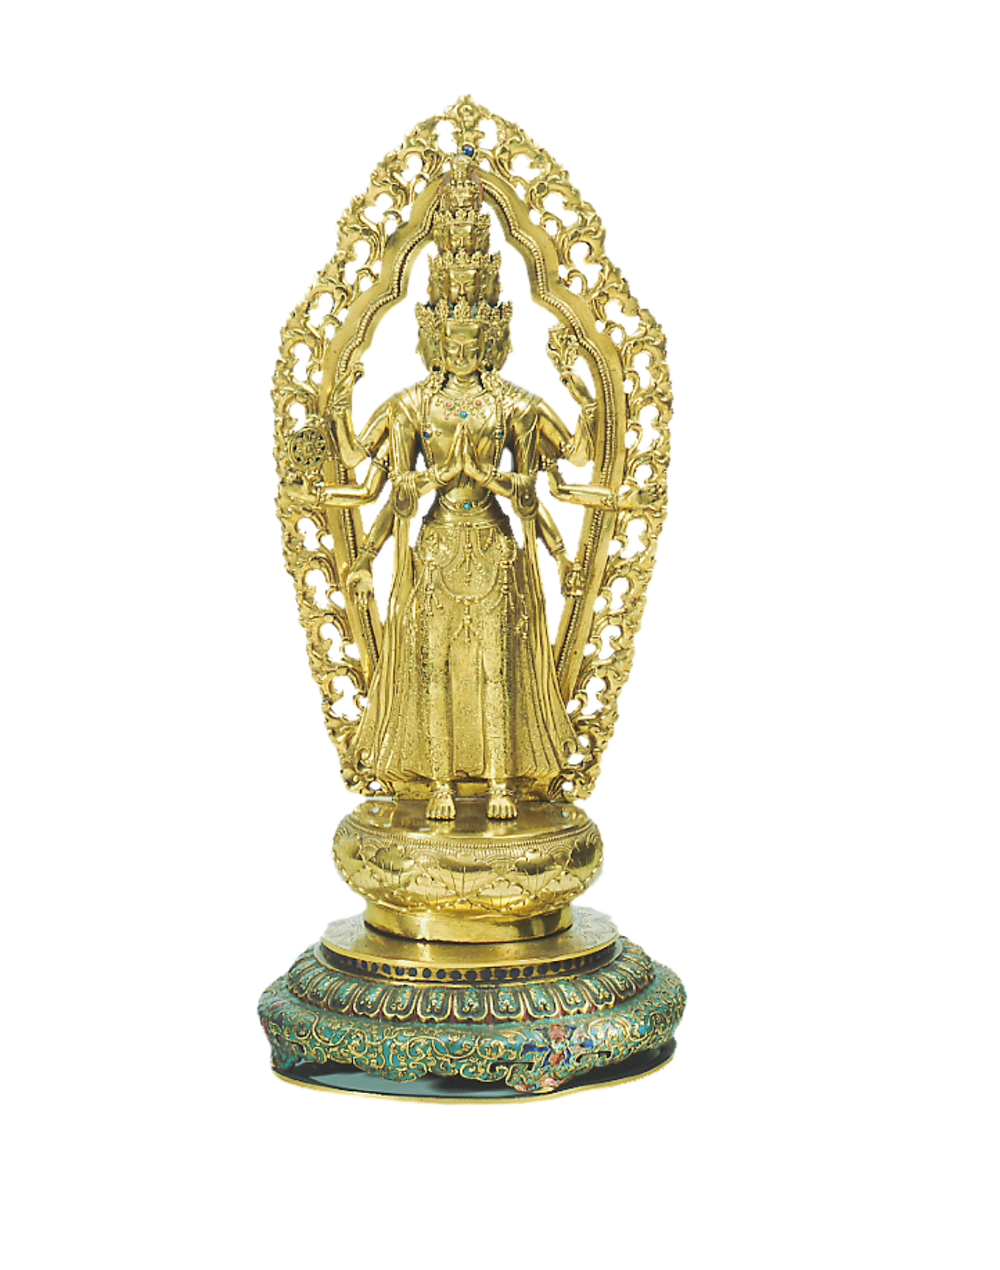 Avalokiteshvara, the Bodhisattva of Compassion